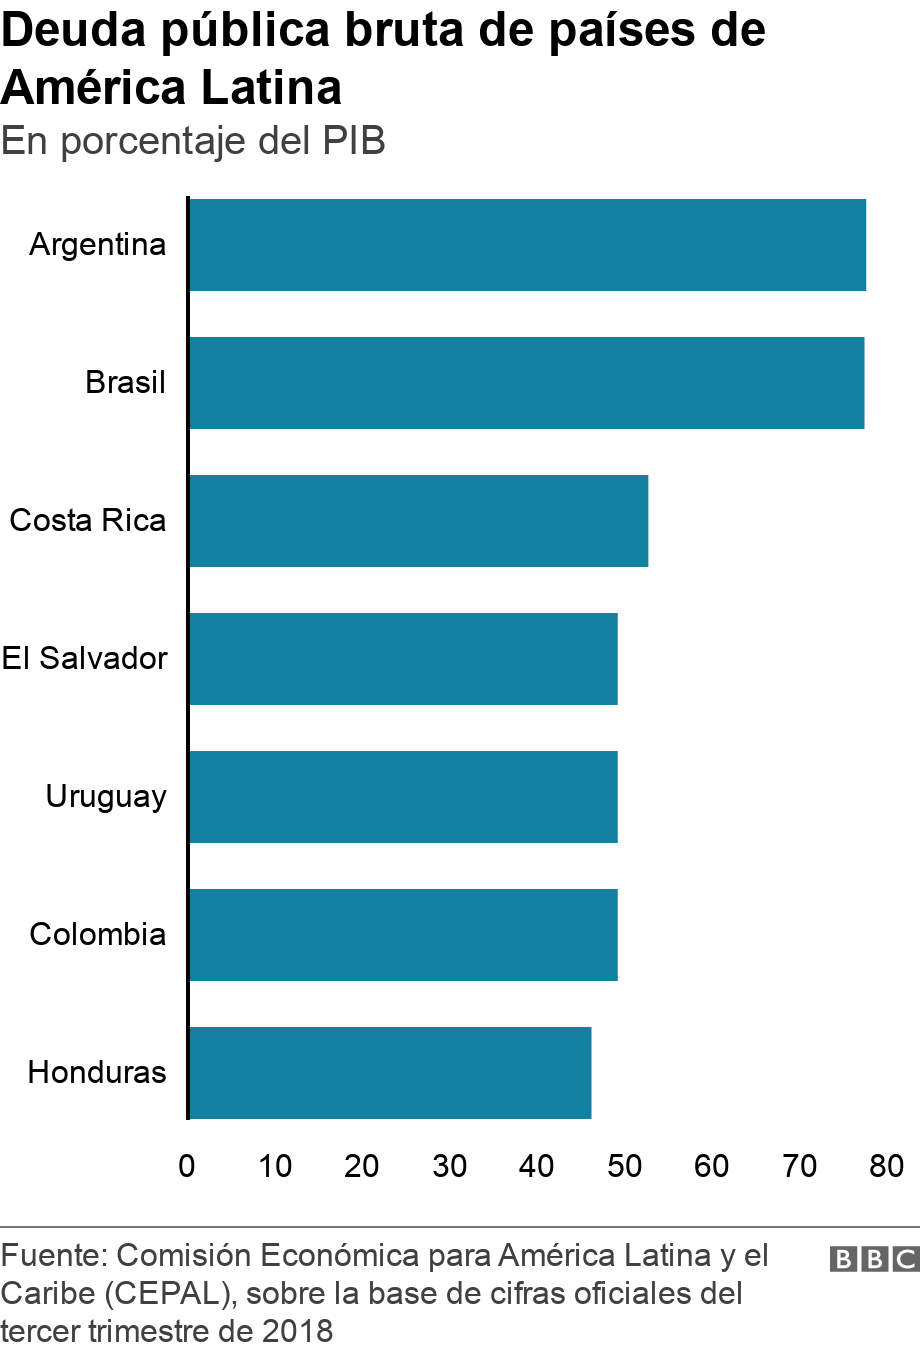 Deuda pública bruta de países de América Latina. En porcentaje del PIB. .